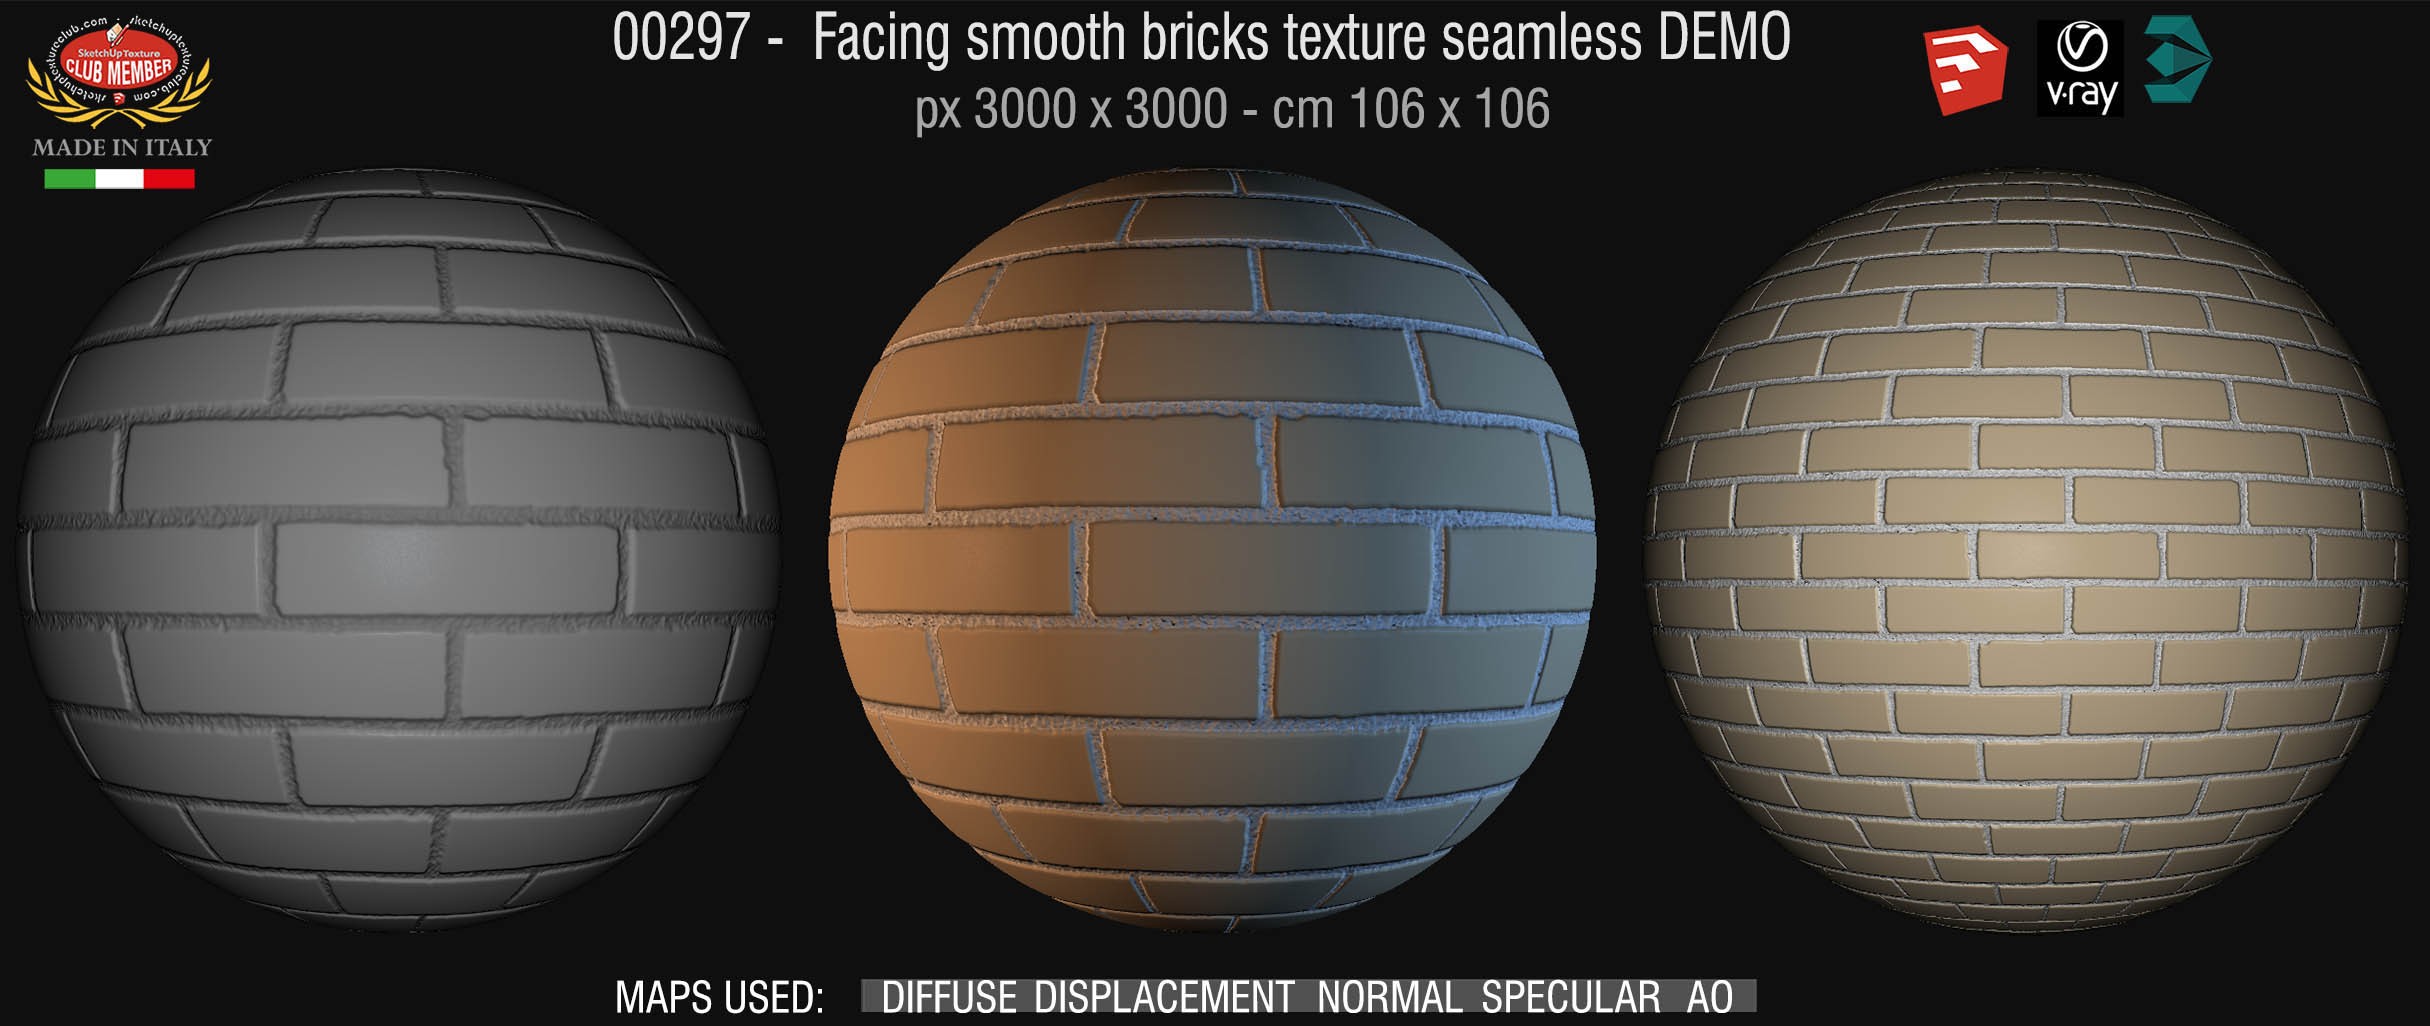 00297 Facing smooth bricks texture seamless + maps DEMO